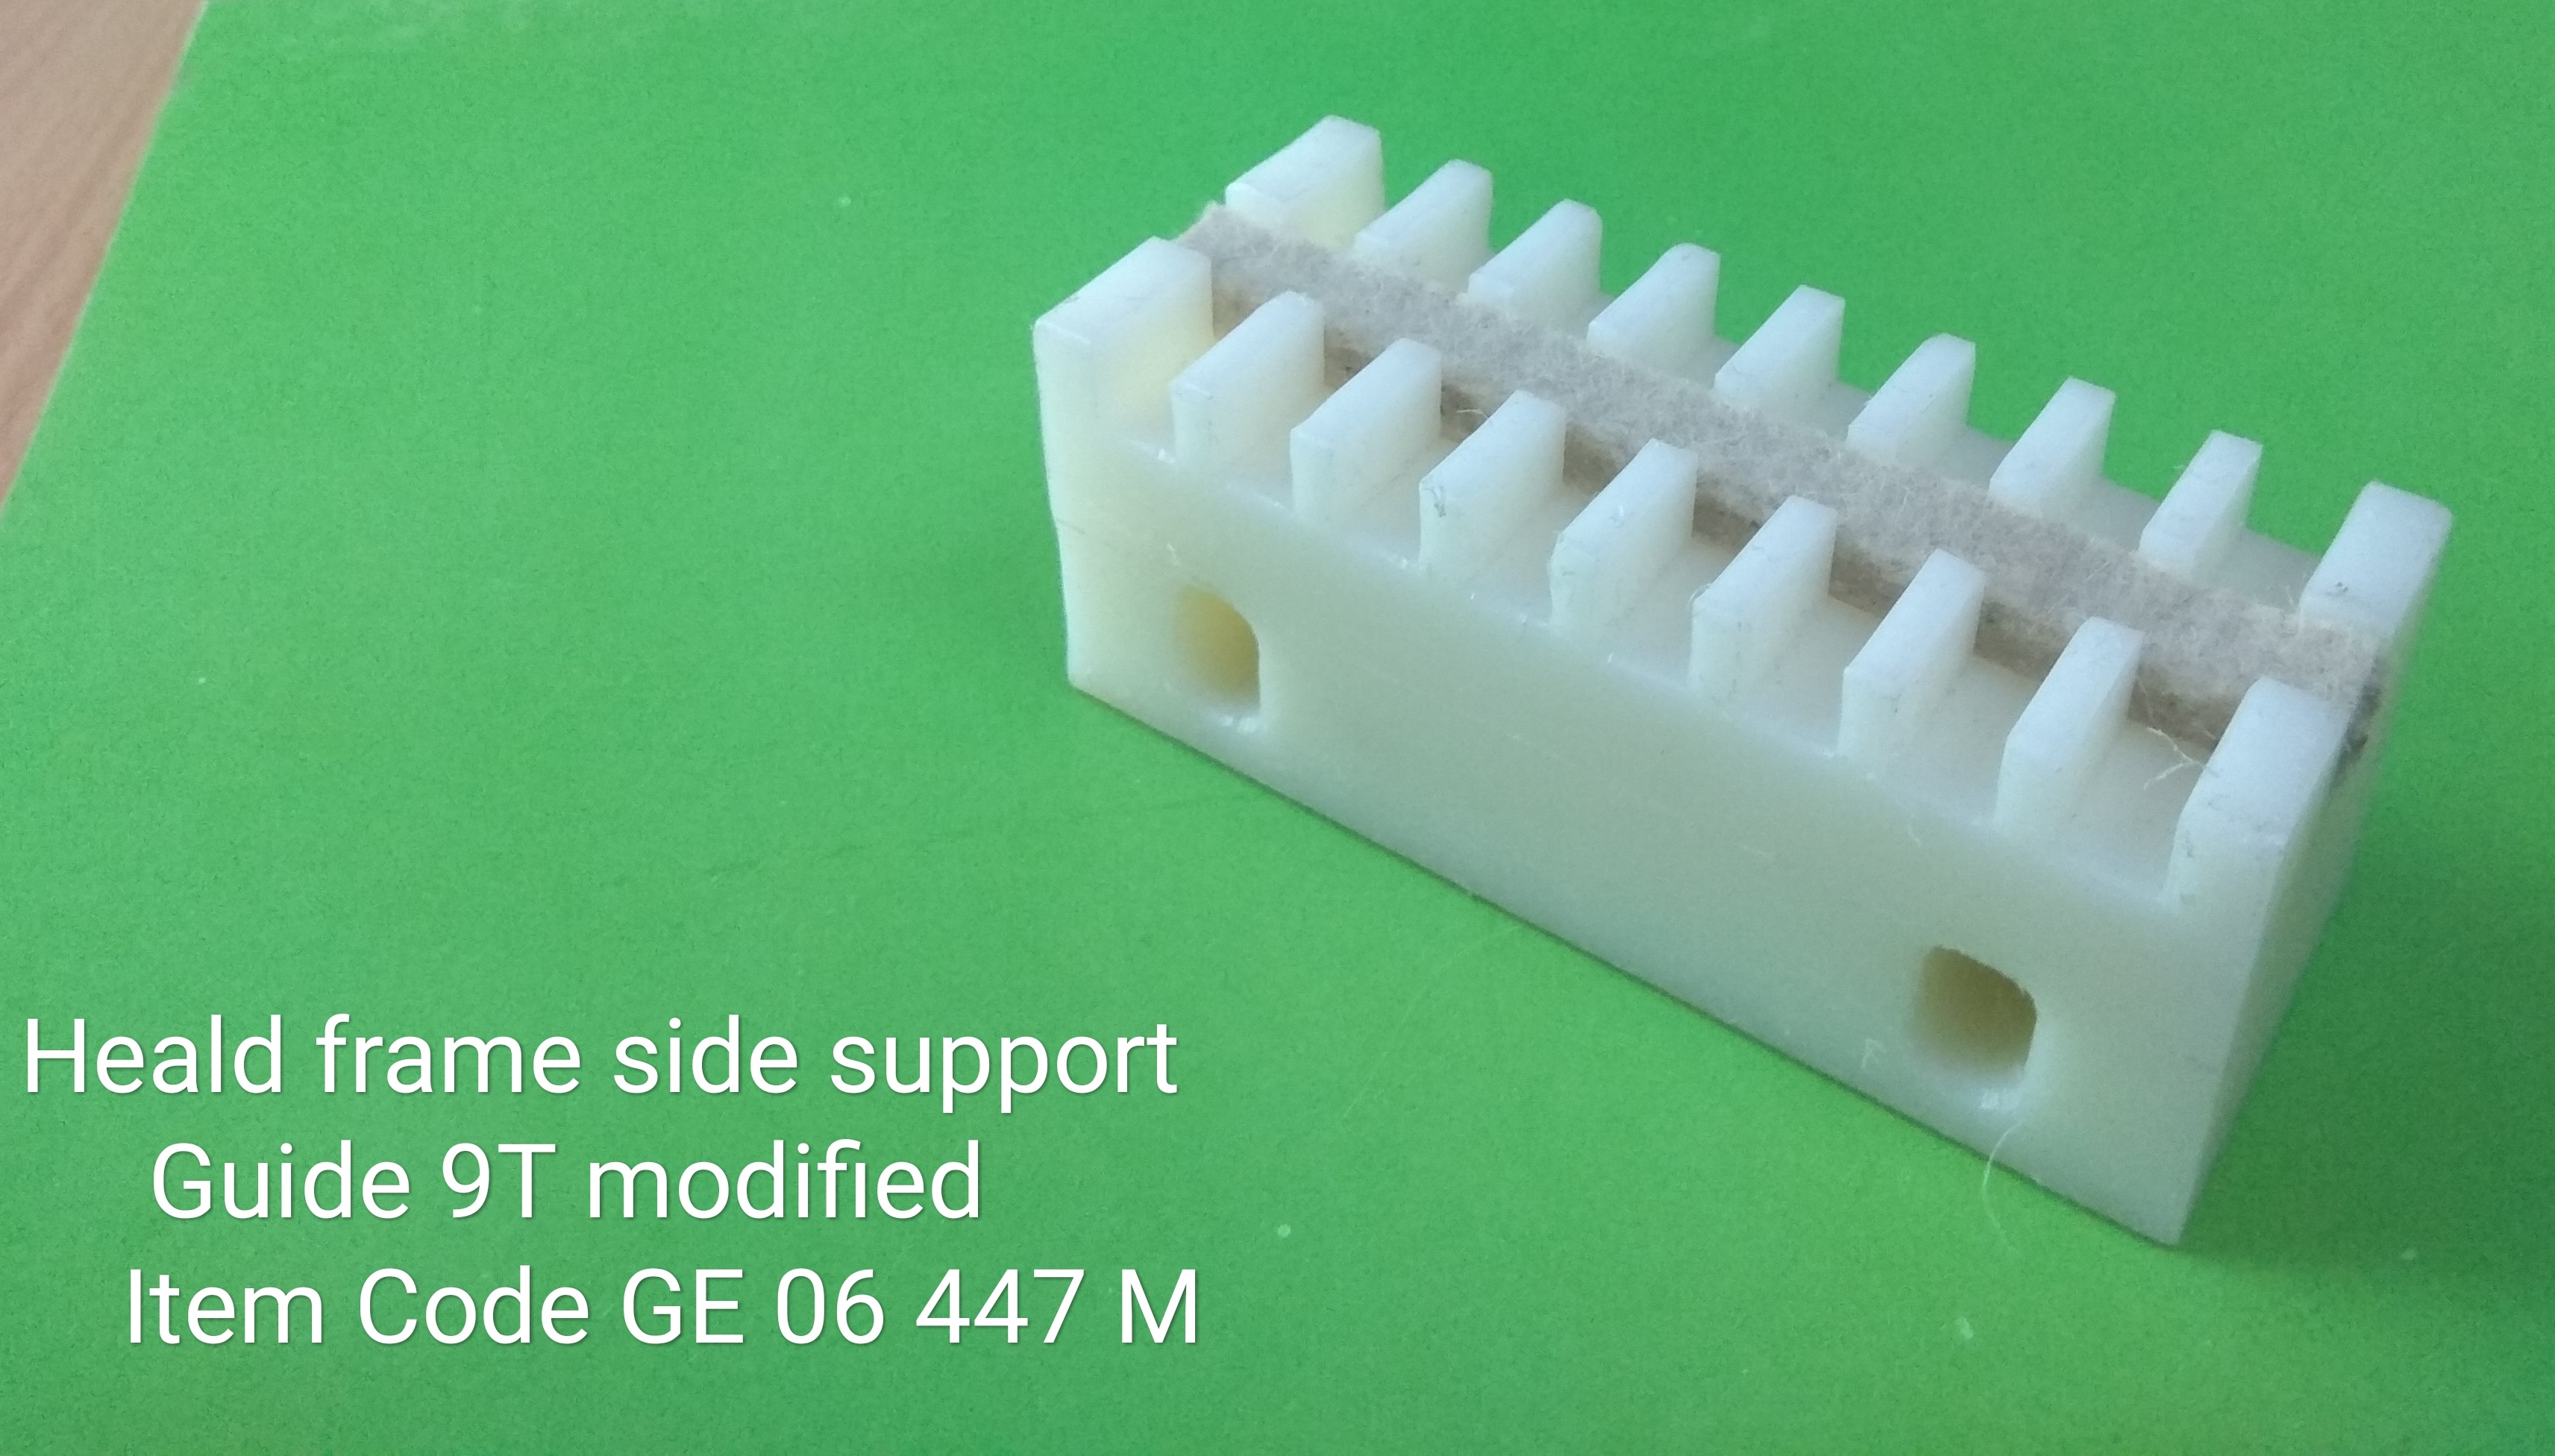 GE_05_447M_Heald_Frame_Side_Support_Guide_9T_1_12.jpg